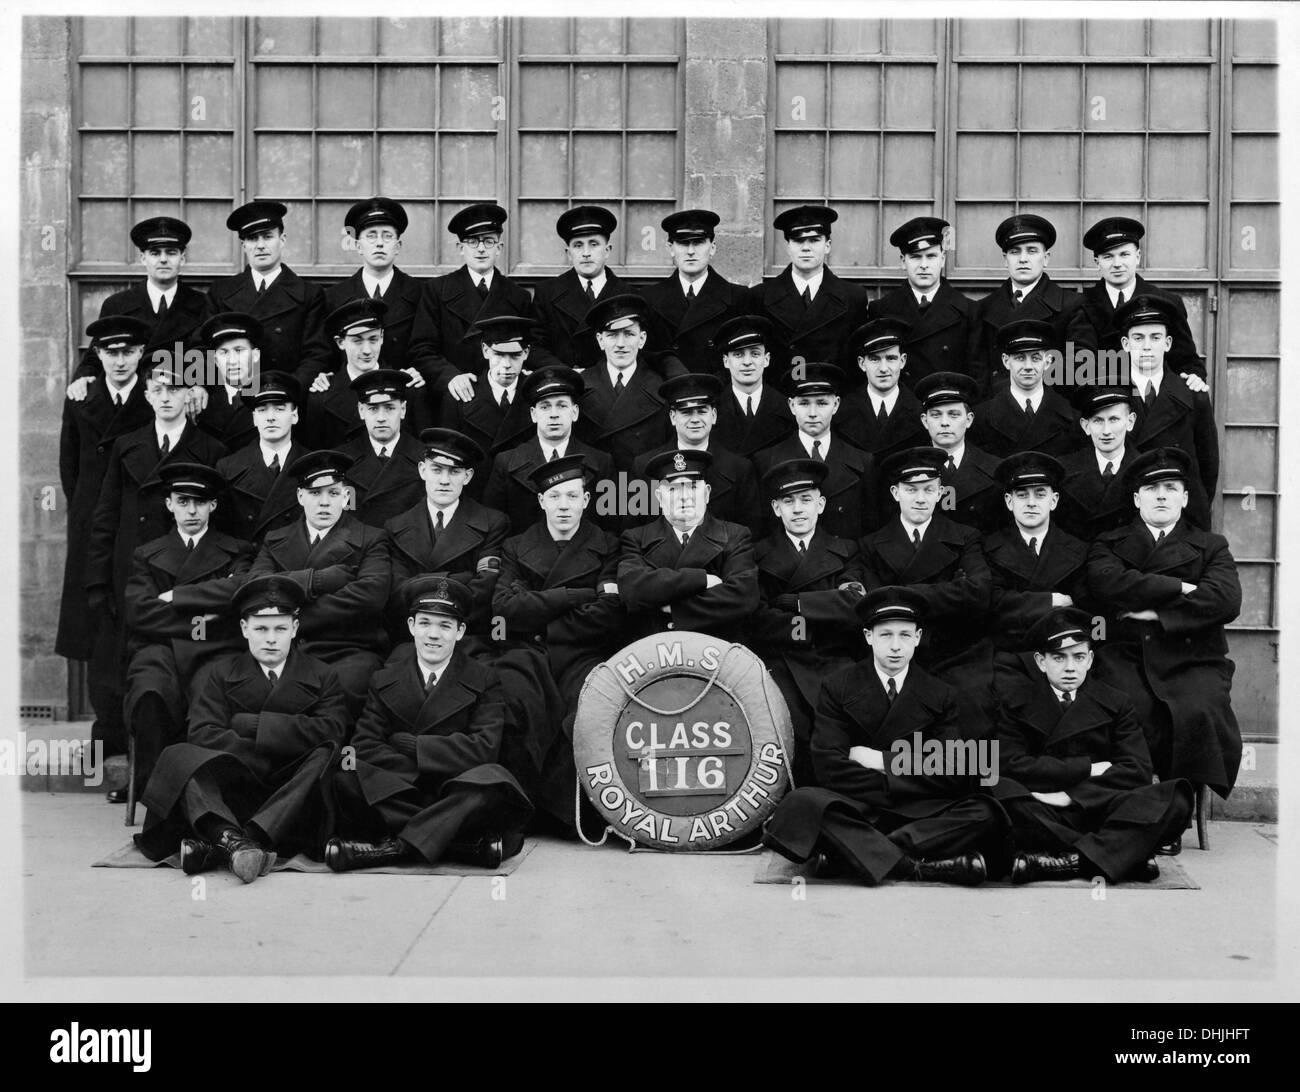 Training at HMS Arthur, class 116 - Historical photograph Stock Photo